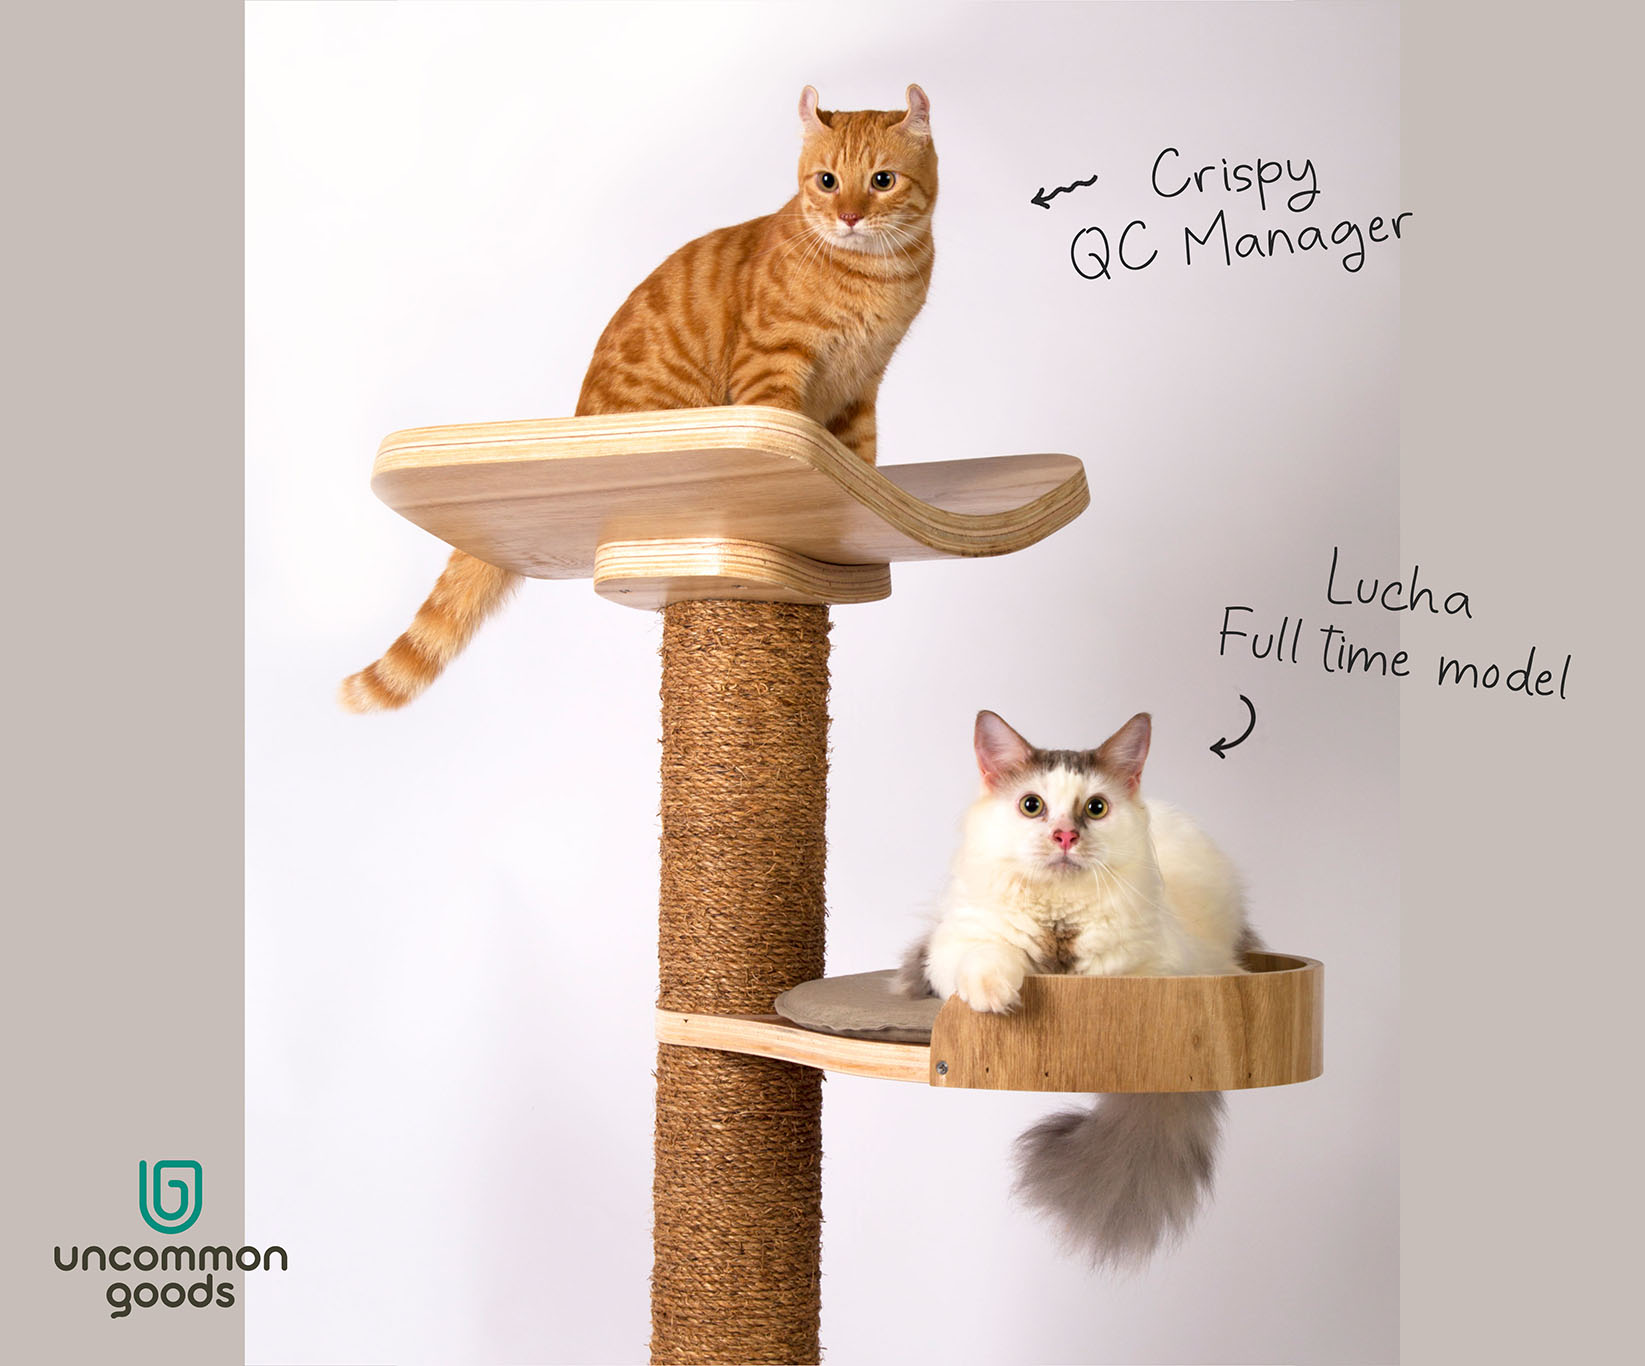 Uncommon Goods Singapore designs a unique cat tree for cats